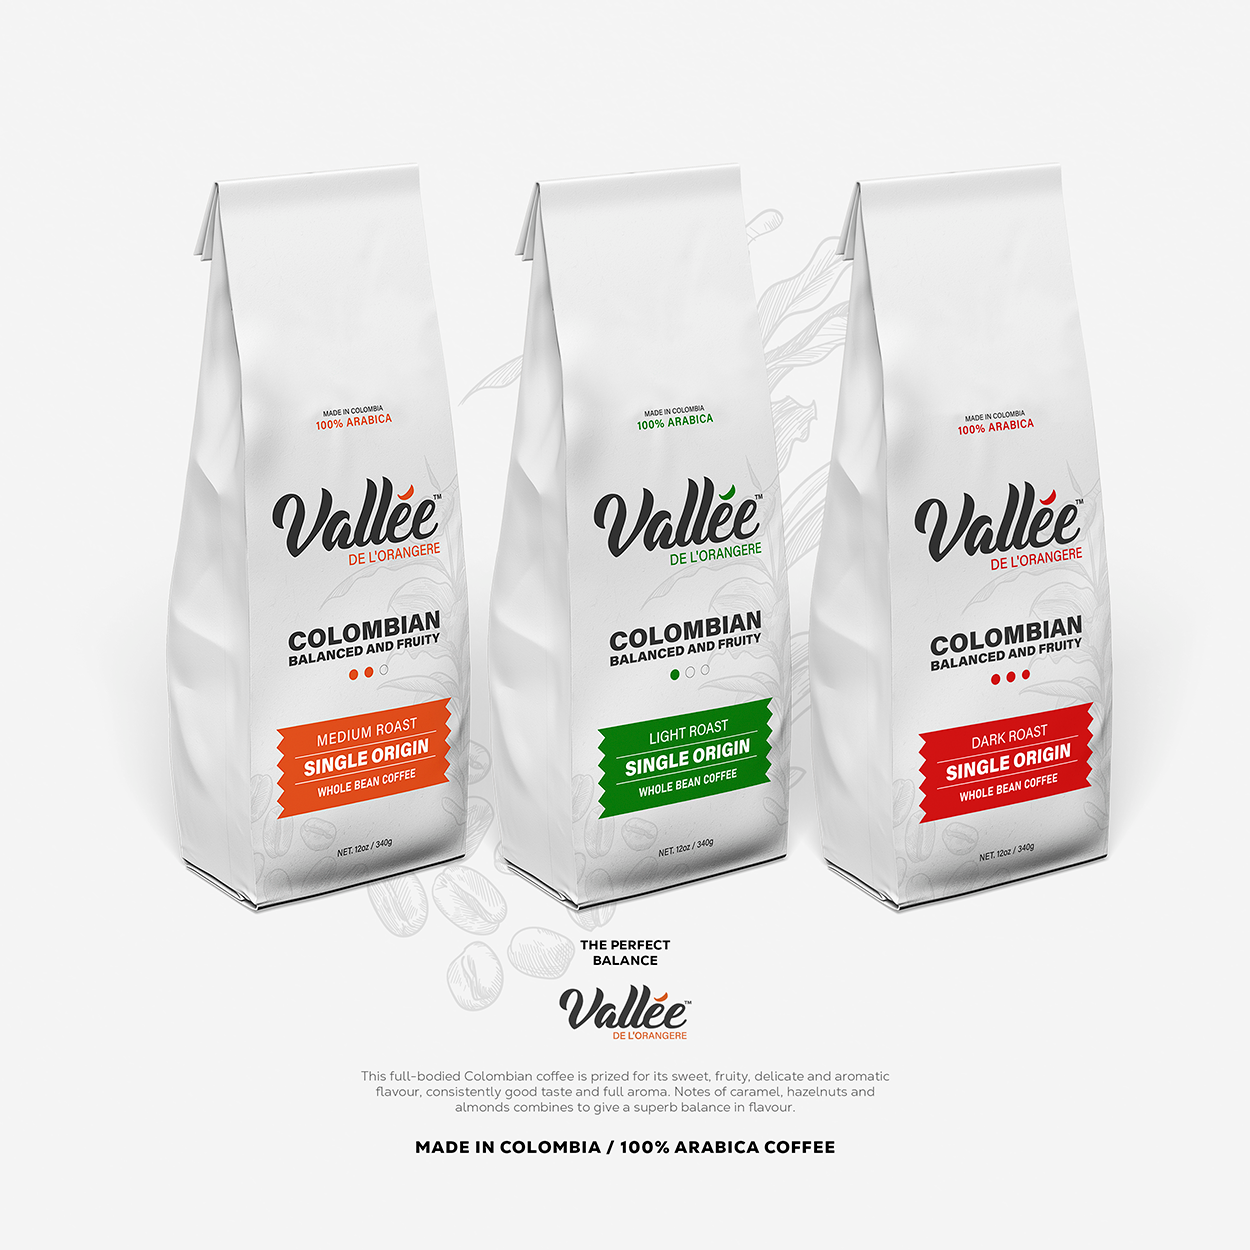 Vallee De'Lorangere Coffee Packaging Design & Branding by Uncuva Design Agency England